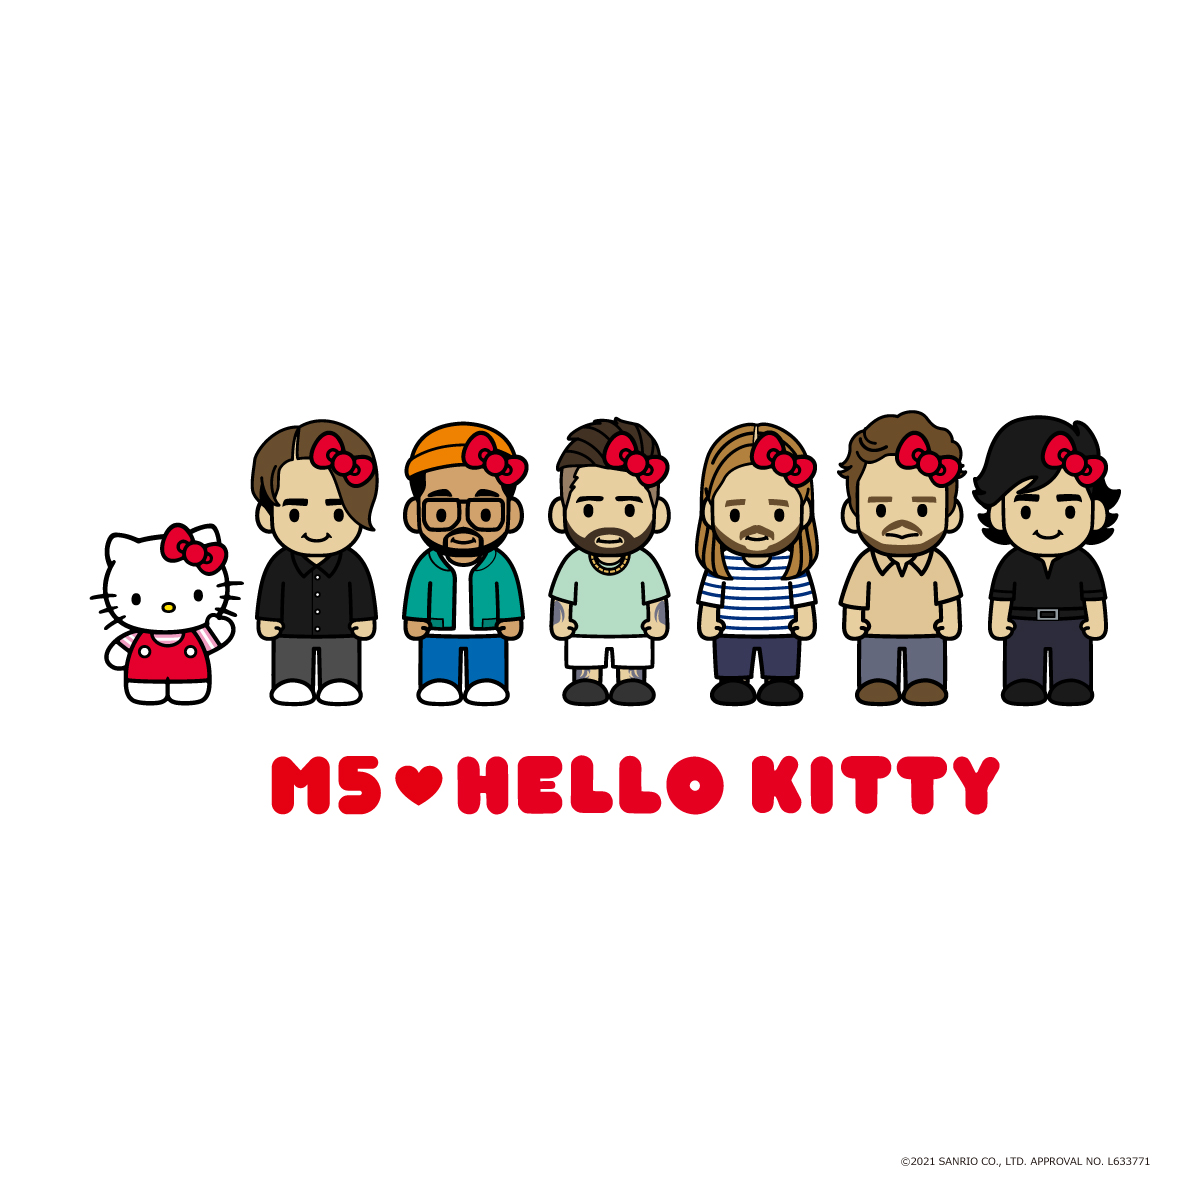 Maroon 5 x Hello Kitty